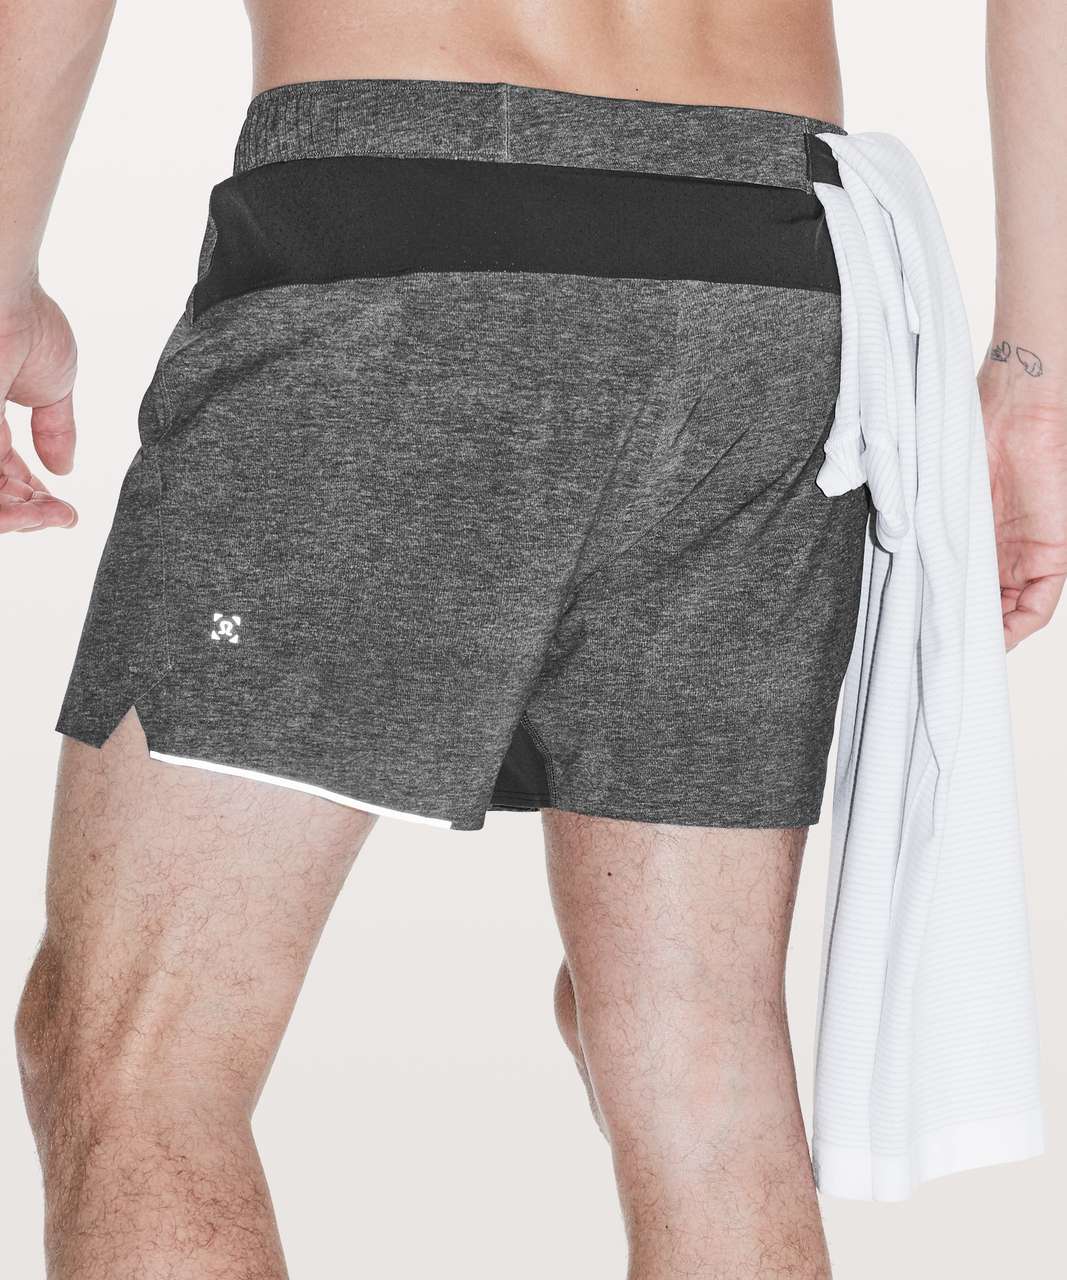 lululemon shorts liner, OFF 70%,Cheap 